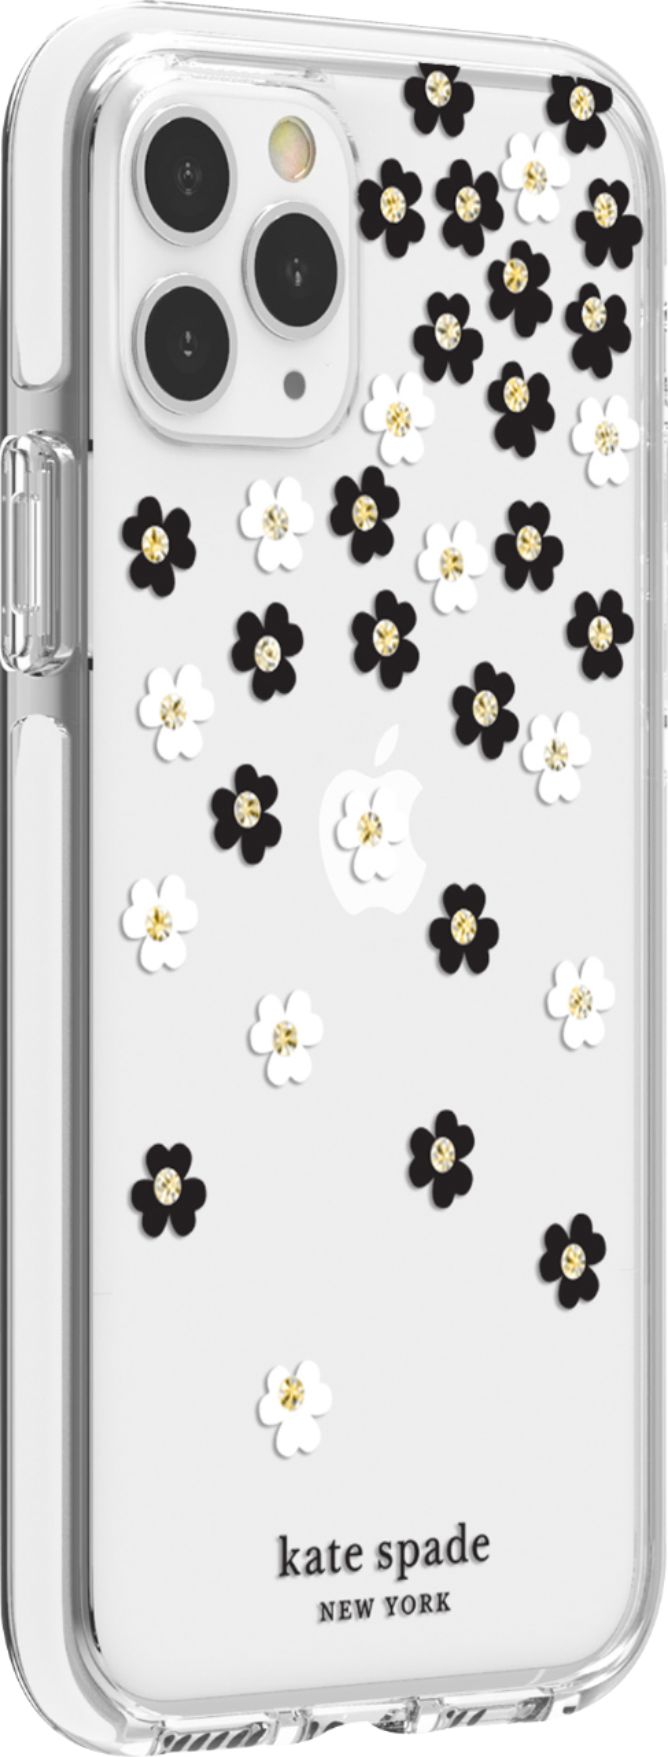 Angle View: kate spade new york - Defensive Hardshell Case for Apple® iPhone® 11 Pro - Scatter Flower Black/White